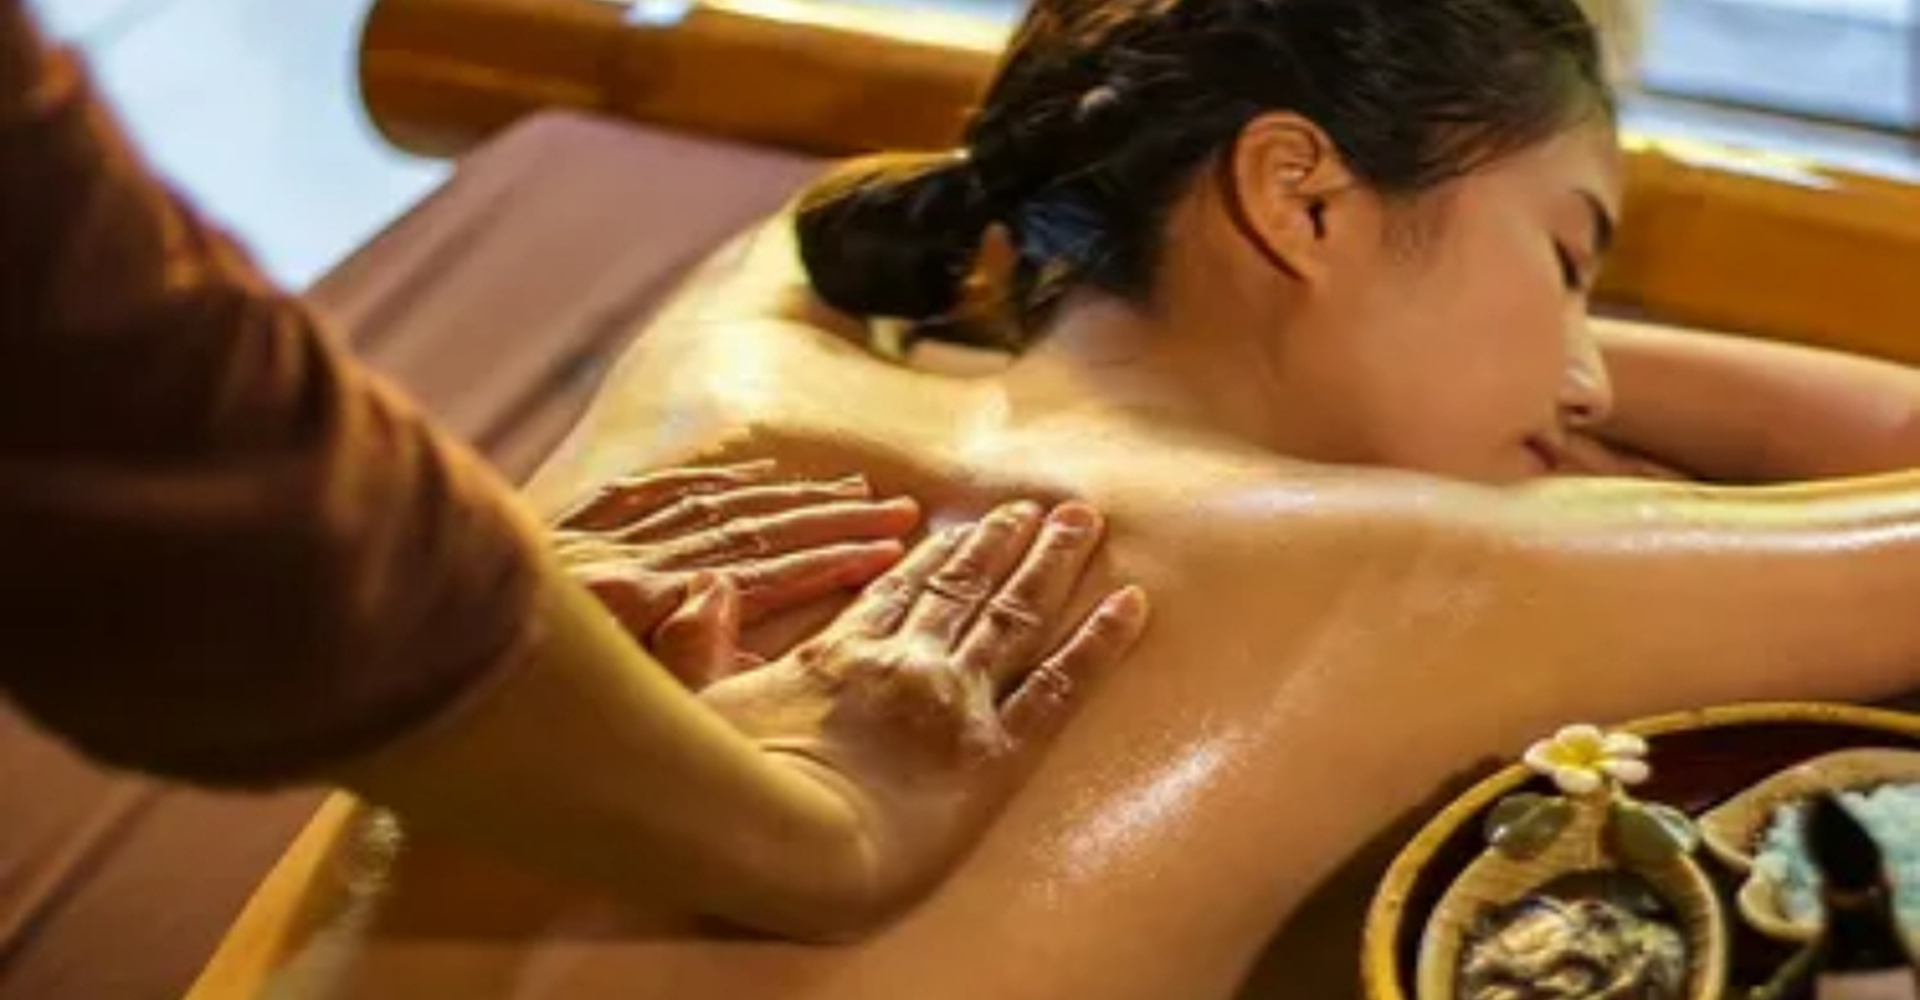 Hot massage video